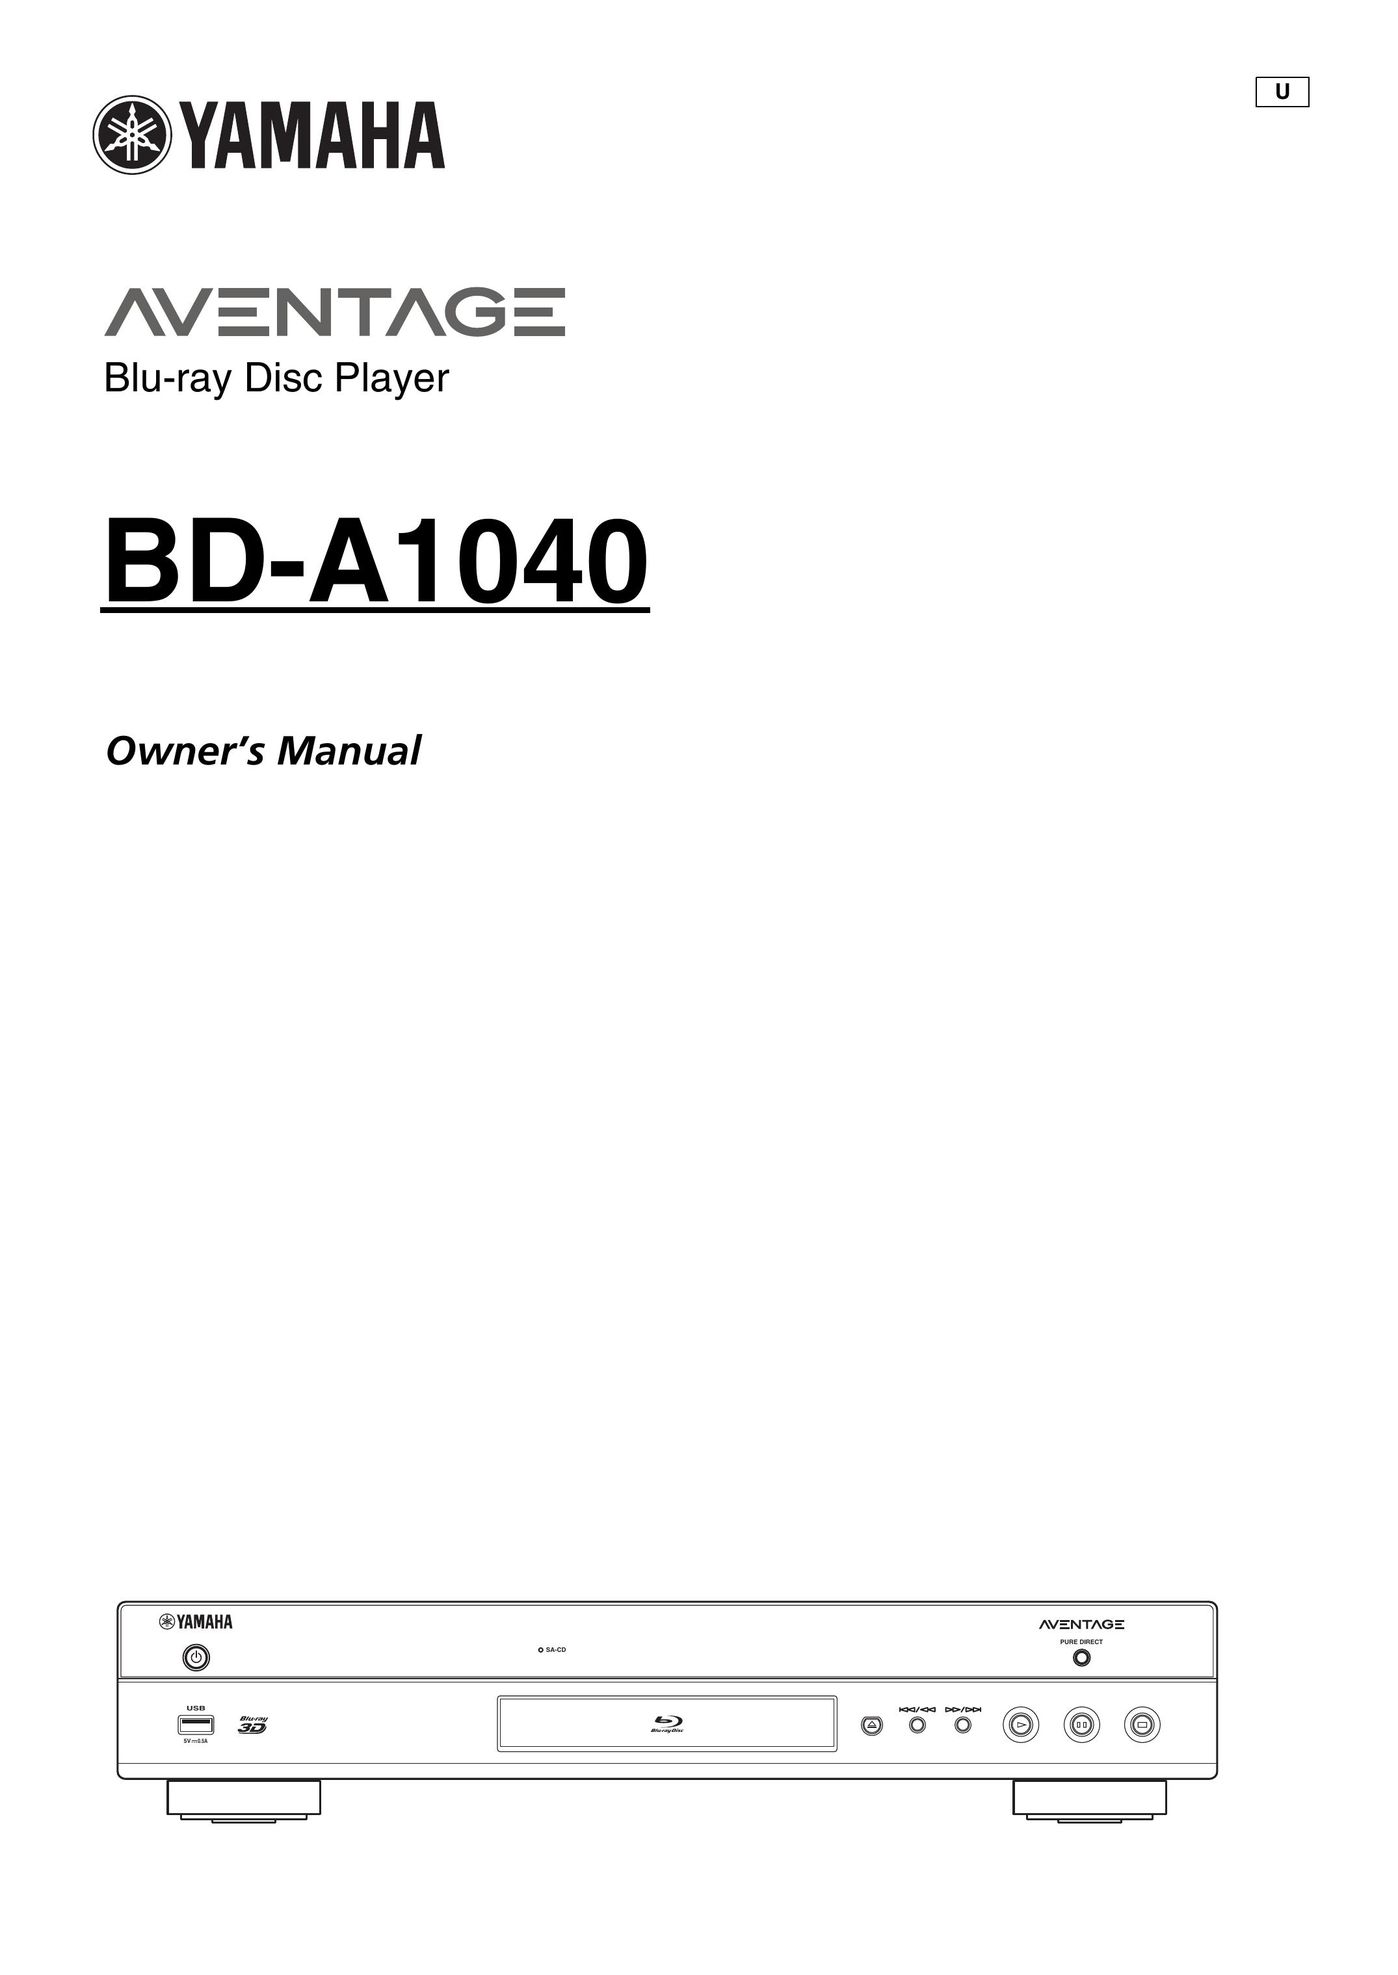 Yamaha BD-A1040BL Blu-ray Player User Manual